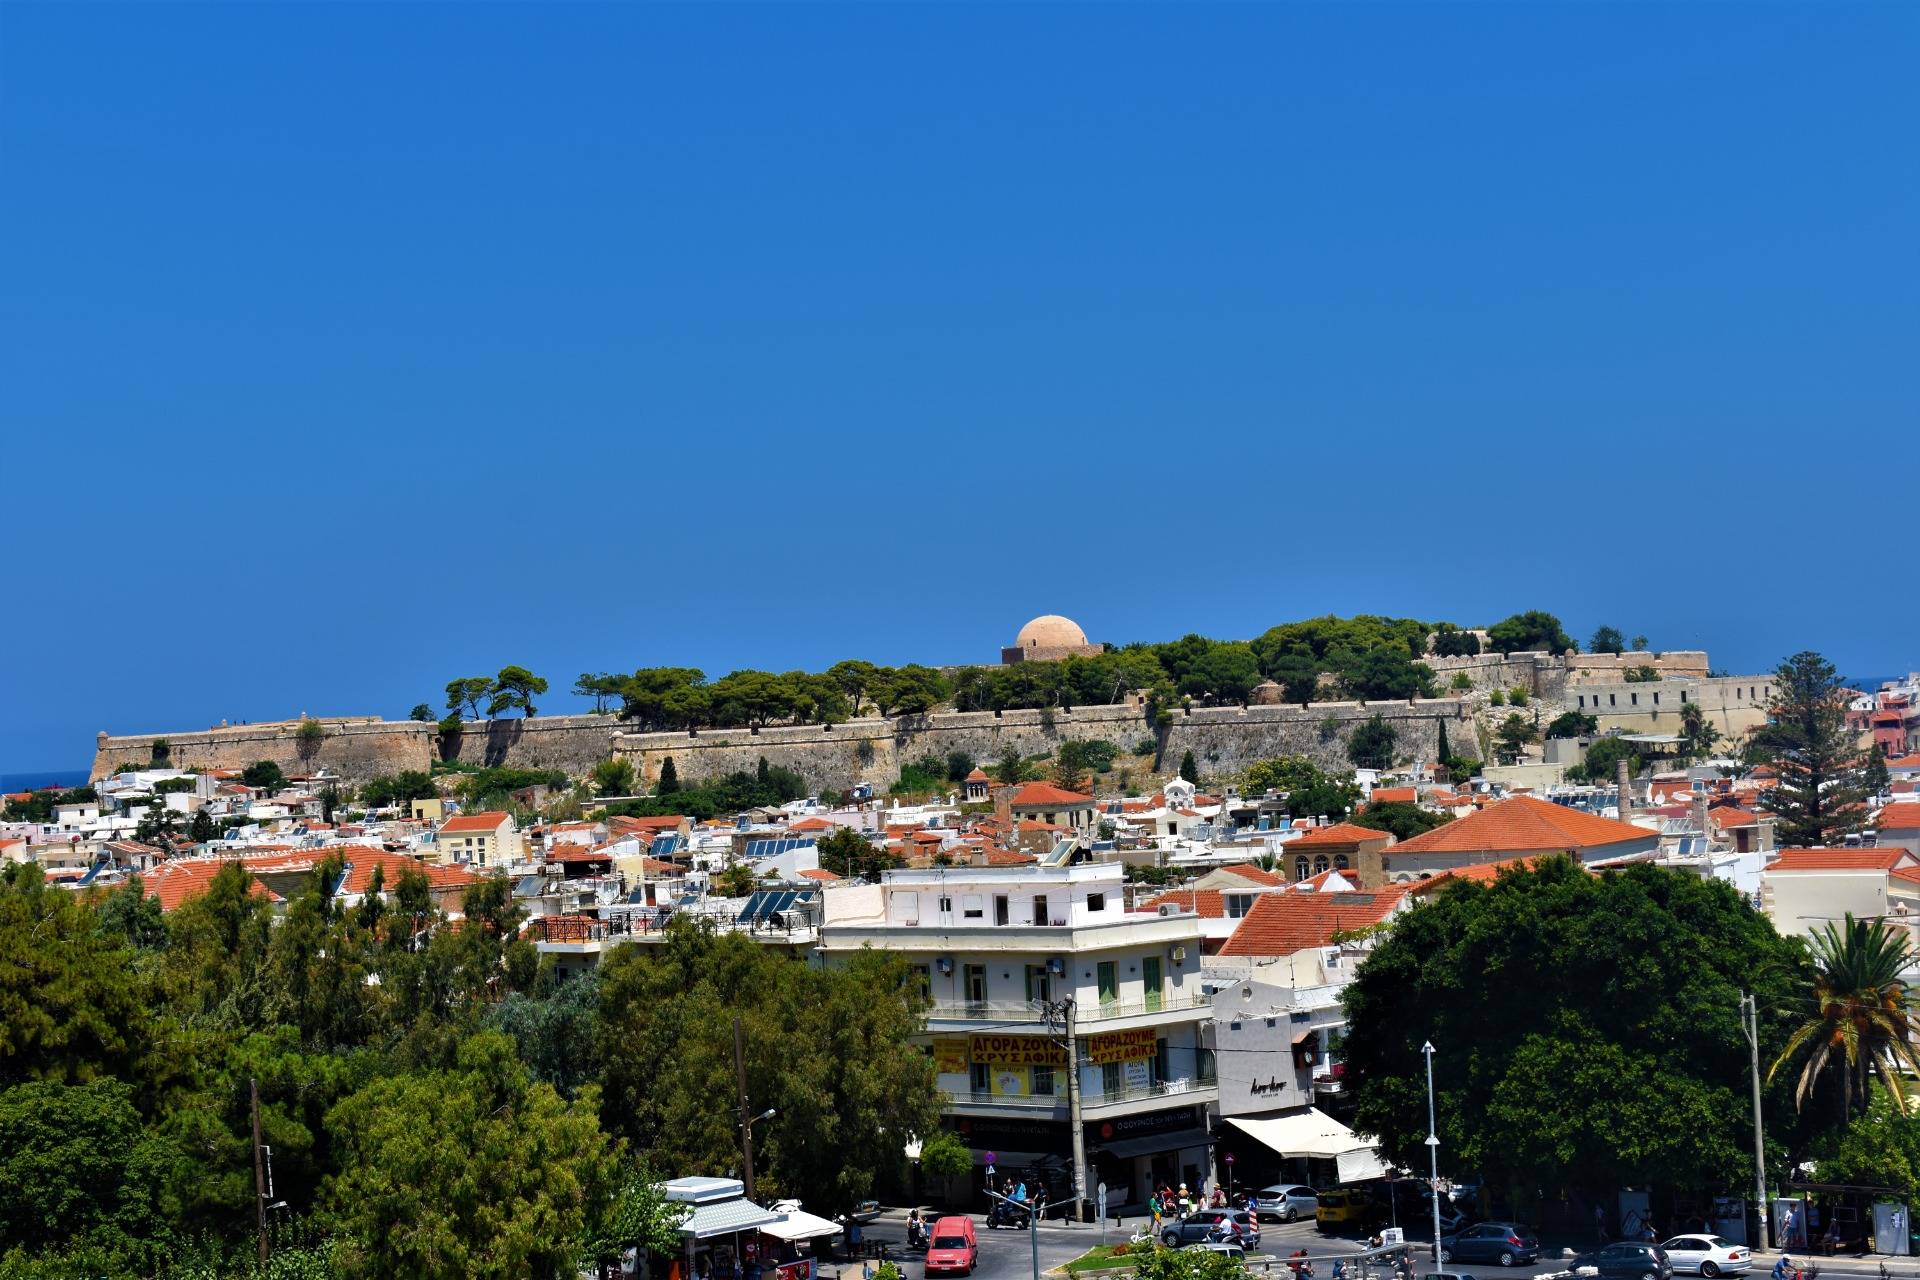 What makes Rethymno unique: The old renaissance town!!